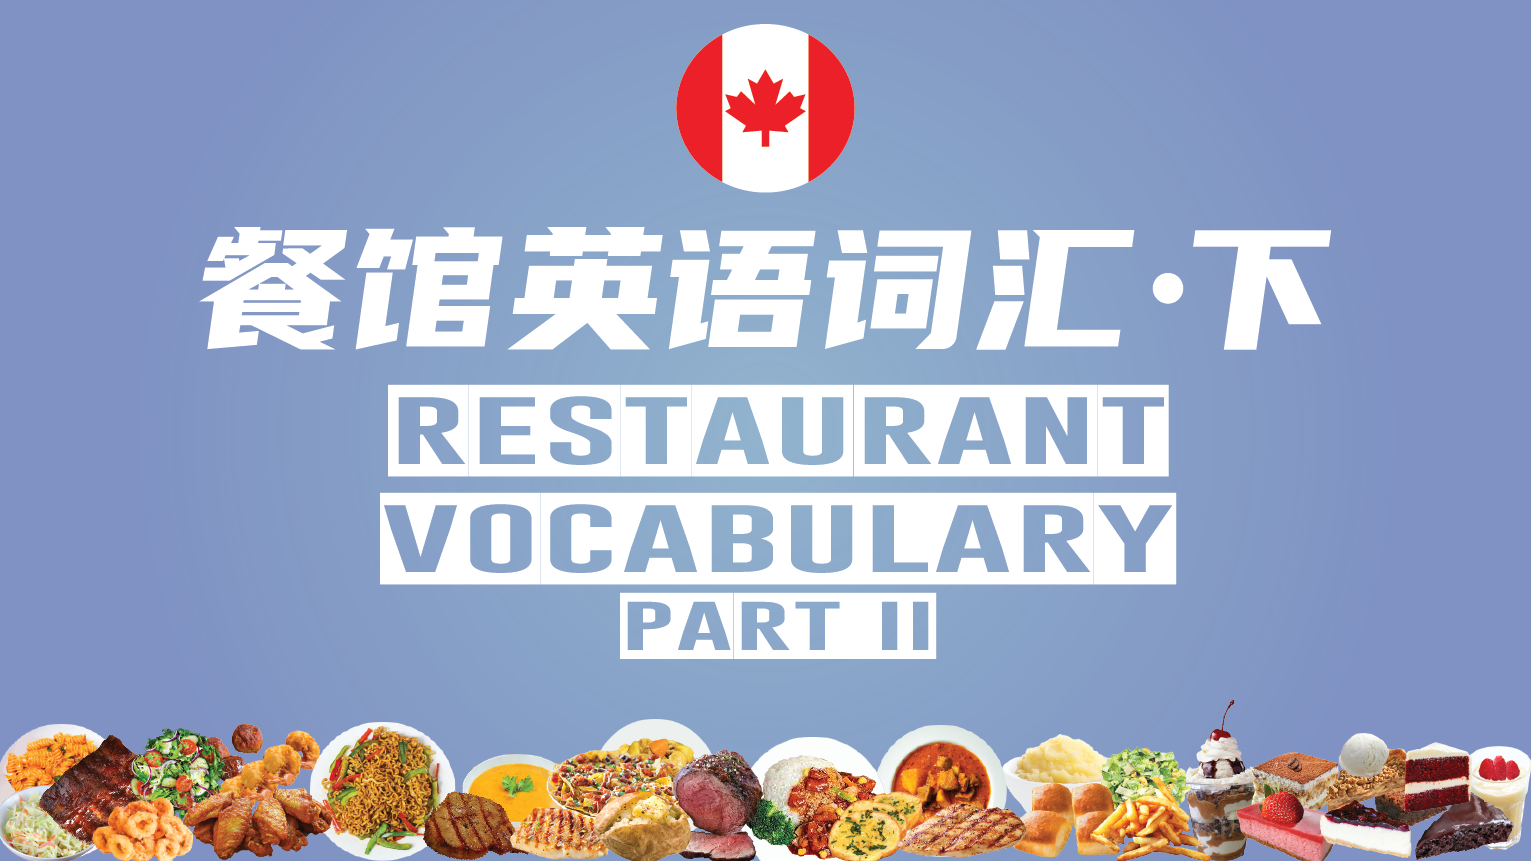 Restaurant Vocabulary - Part 2